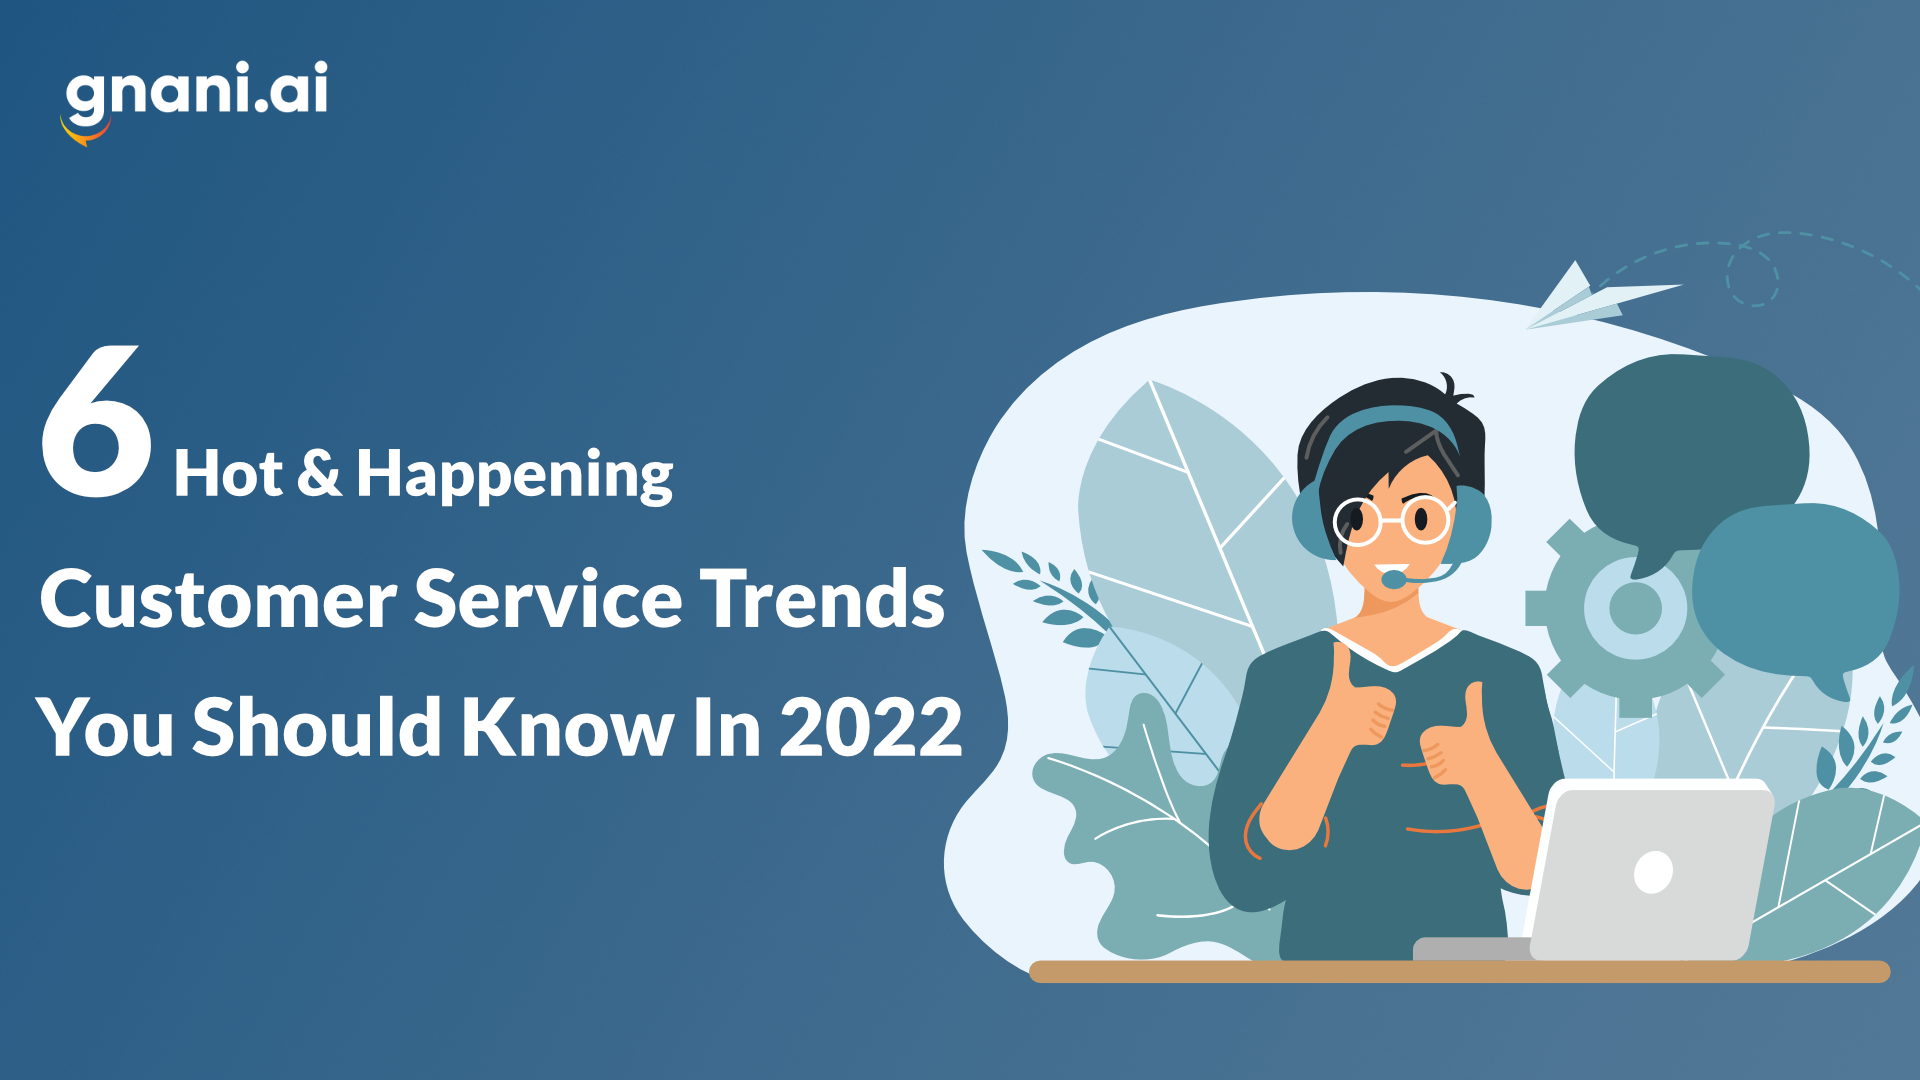 customer service trends 2022 gnani.ai